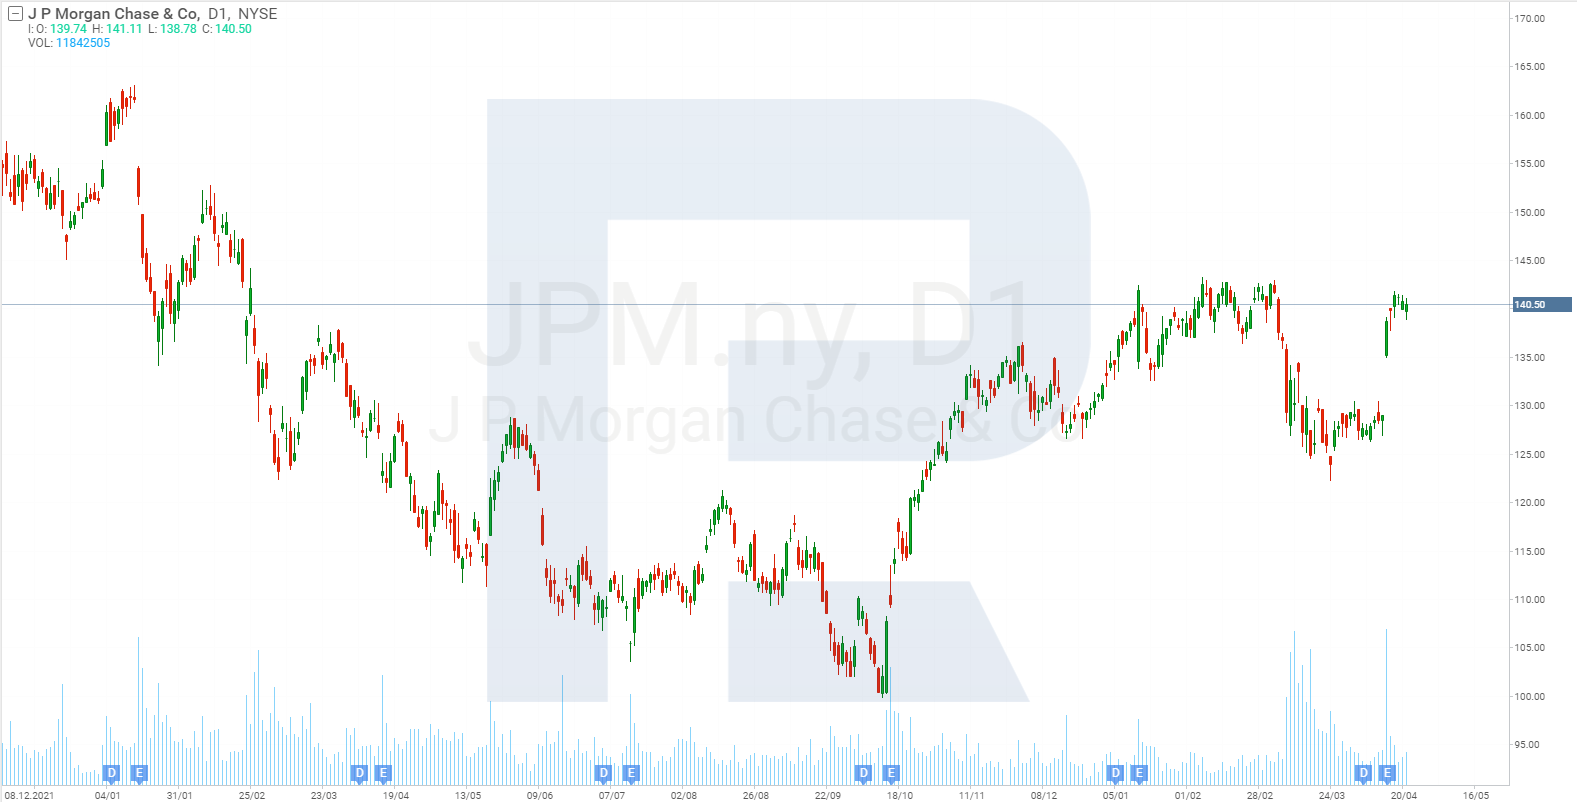 JPMorgan Chase & Co. stock chart